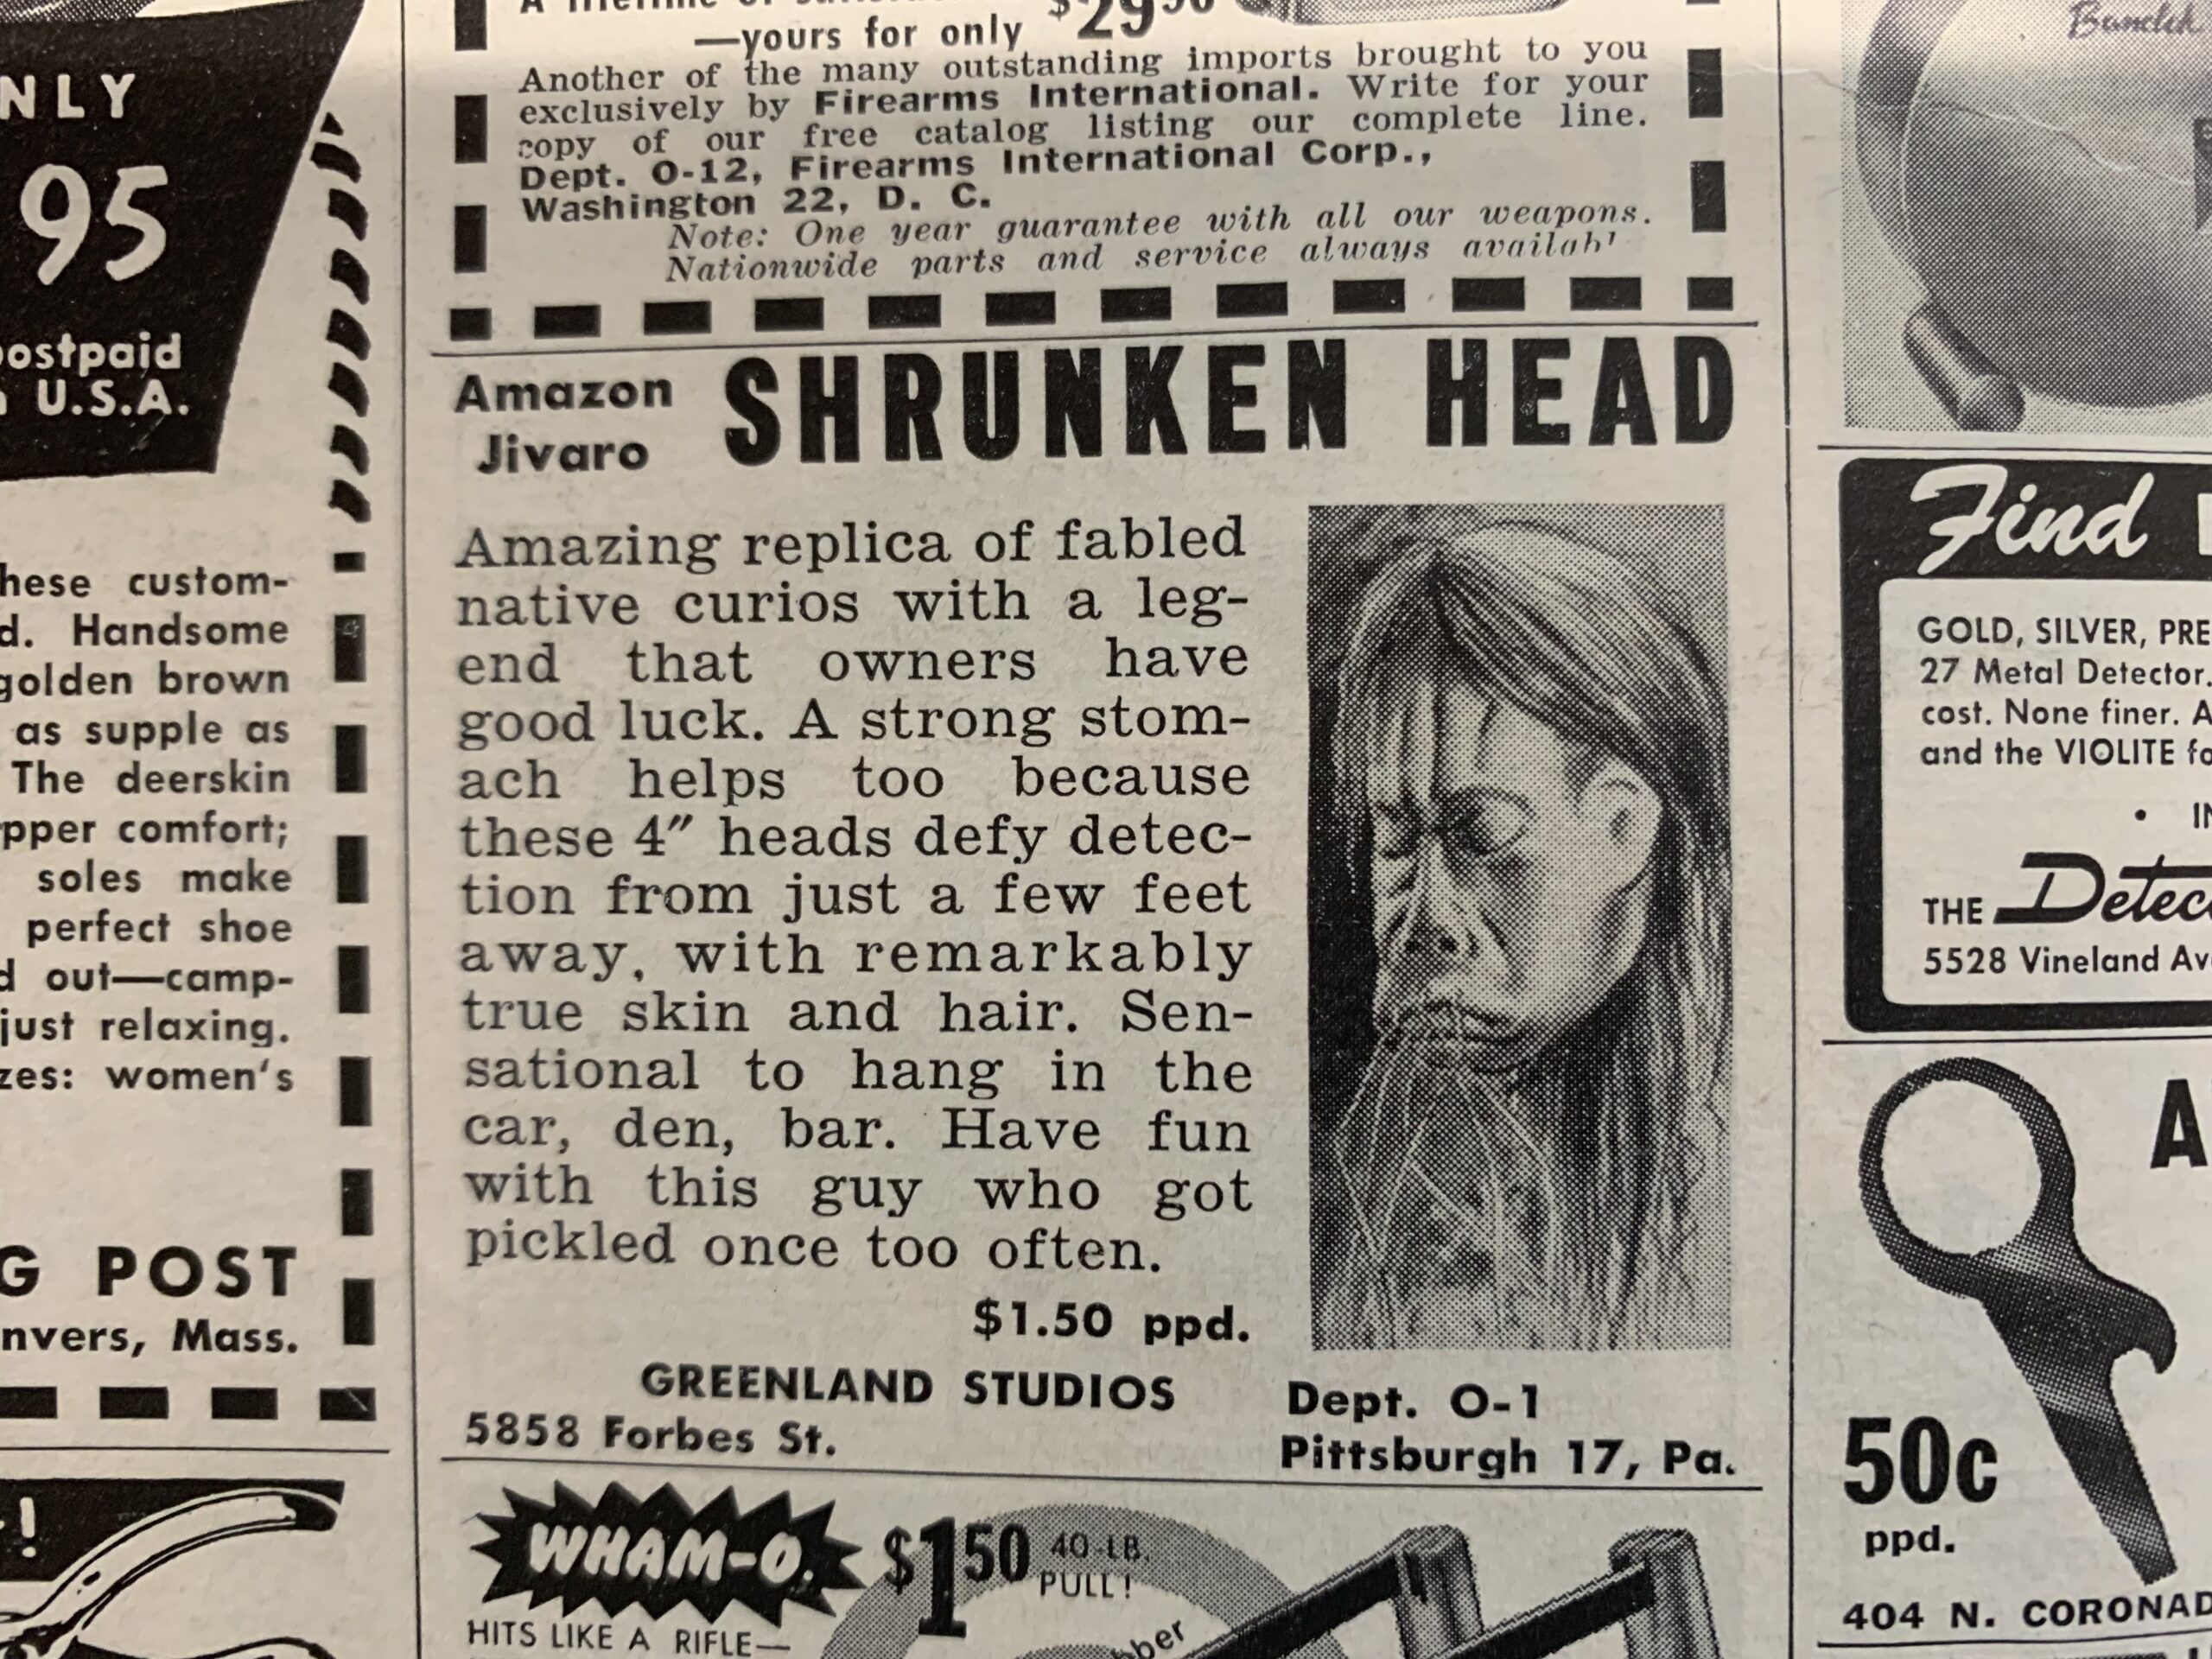 Vintage ad for shrunken head replicas